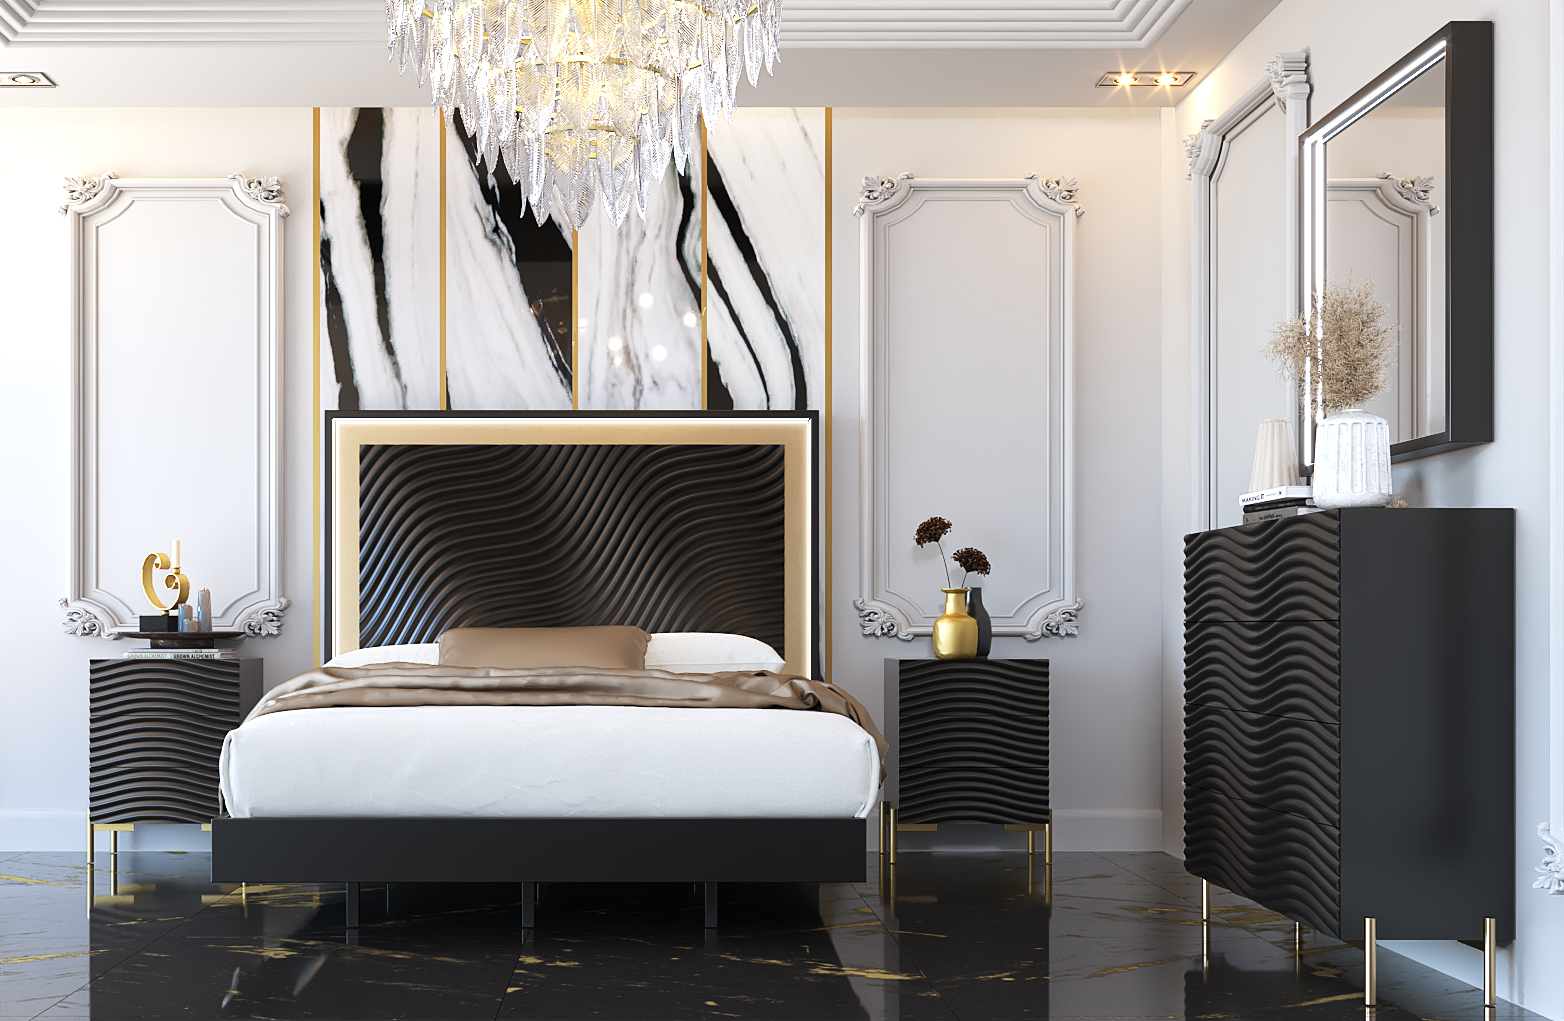 https://www.primeclassicdesign.com/images/modern-italian-bedroom-sets/wave-design-bedroom-set-with-led-light-headboard-golden-trim-e-wave.jpg